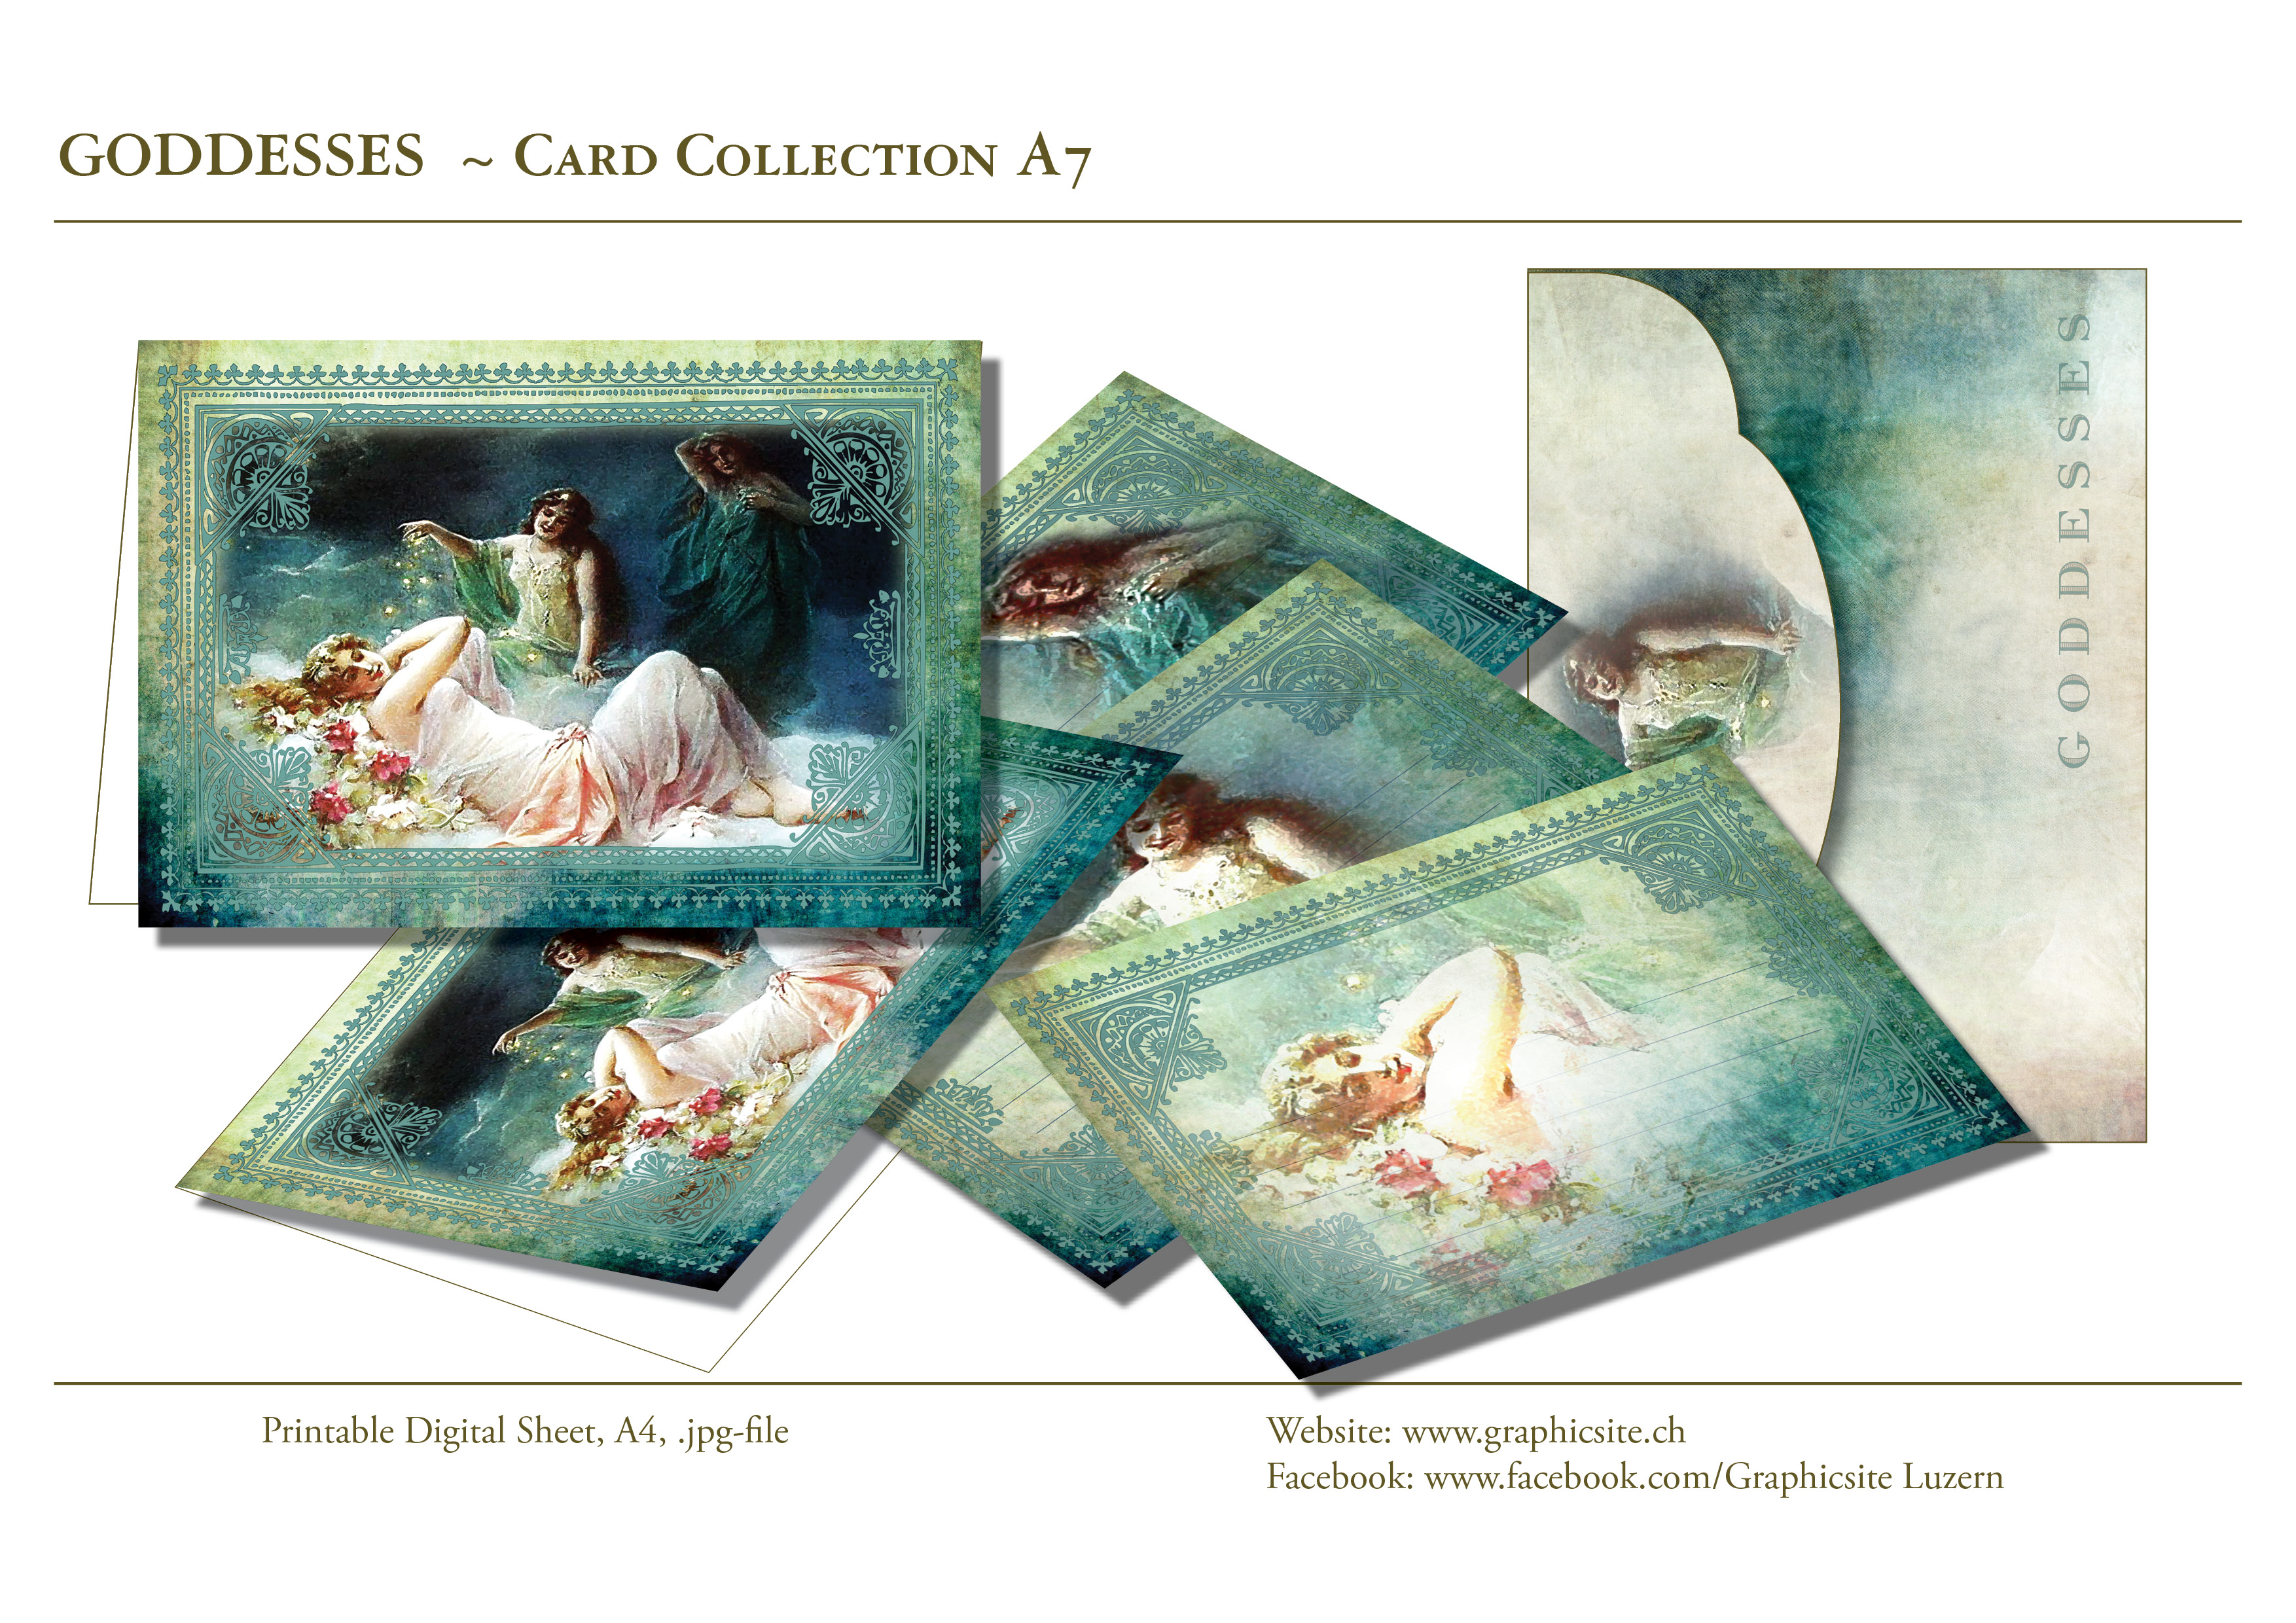 Printable Digital Sheets - Card Collection A7 - Goddesses - Vintage, Ornamental, Greeting Cards, Postcards, Envelop, Graphic Design Luzern, 